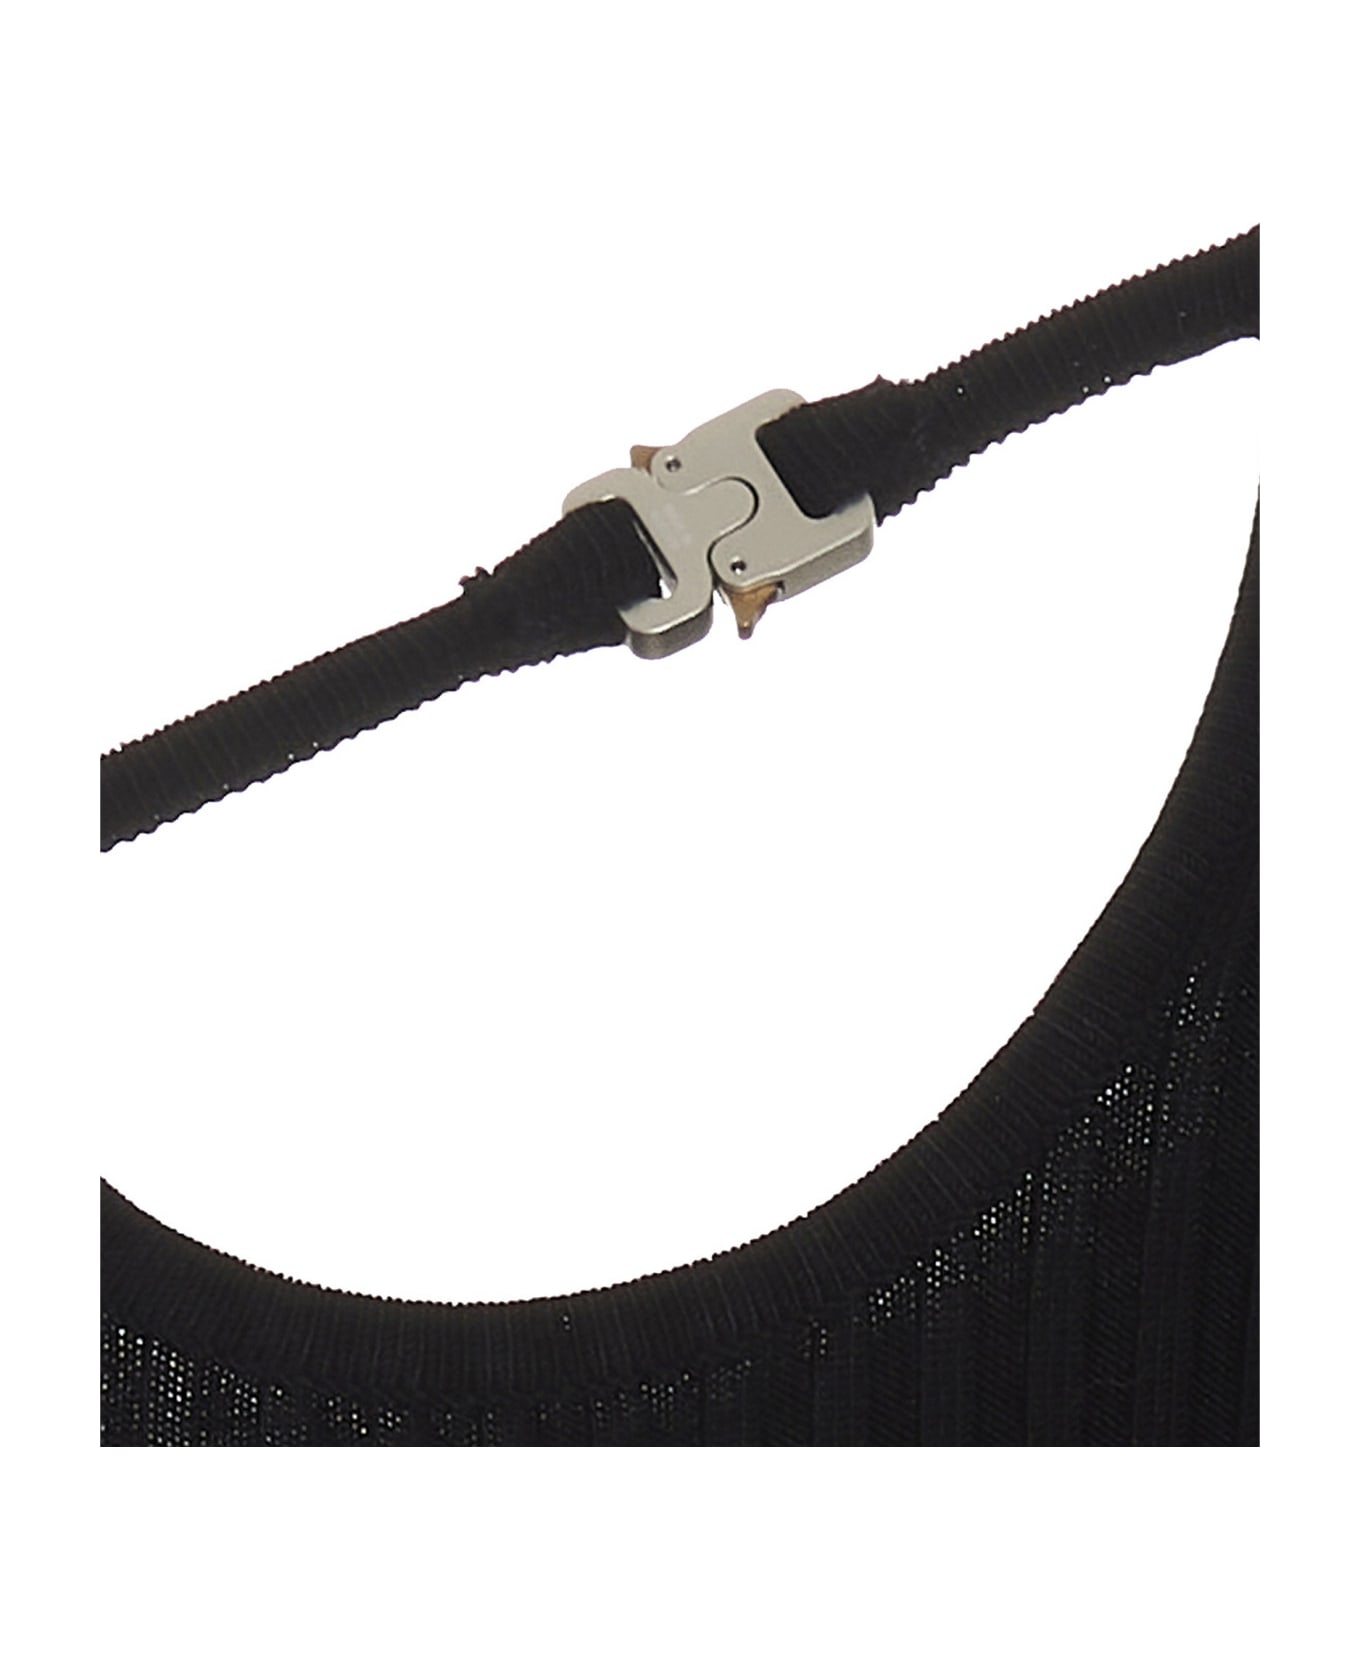 1017 ALYX 9SM 'buckle Webbed Knit' Dress - Black